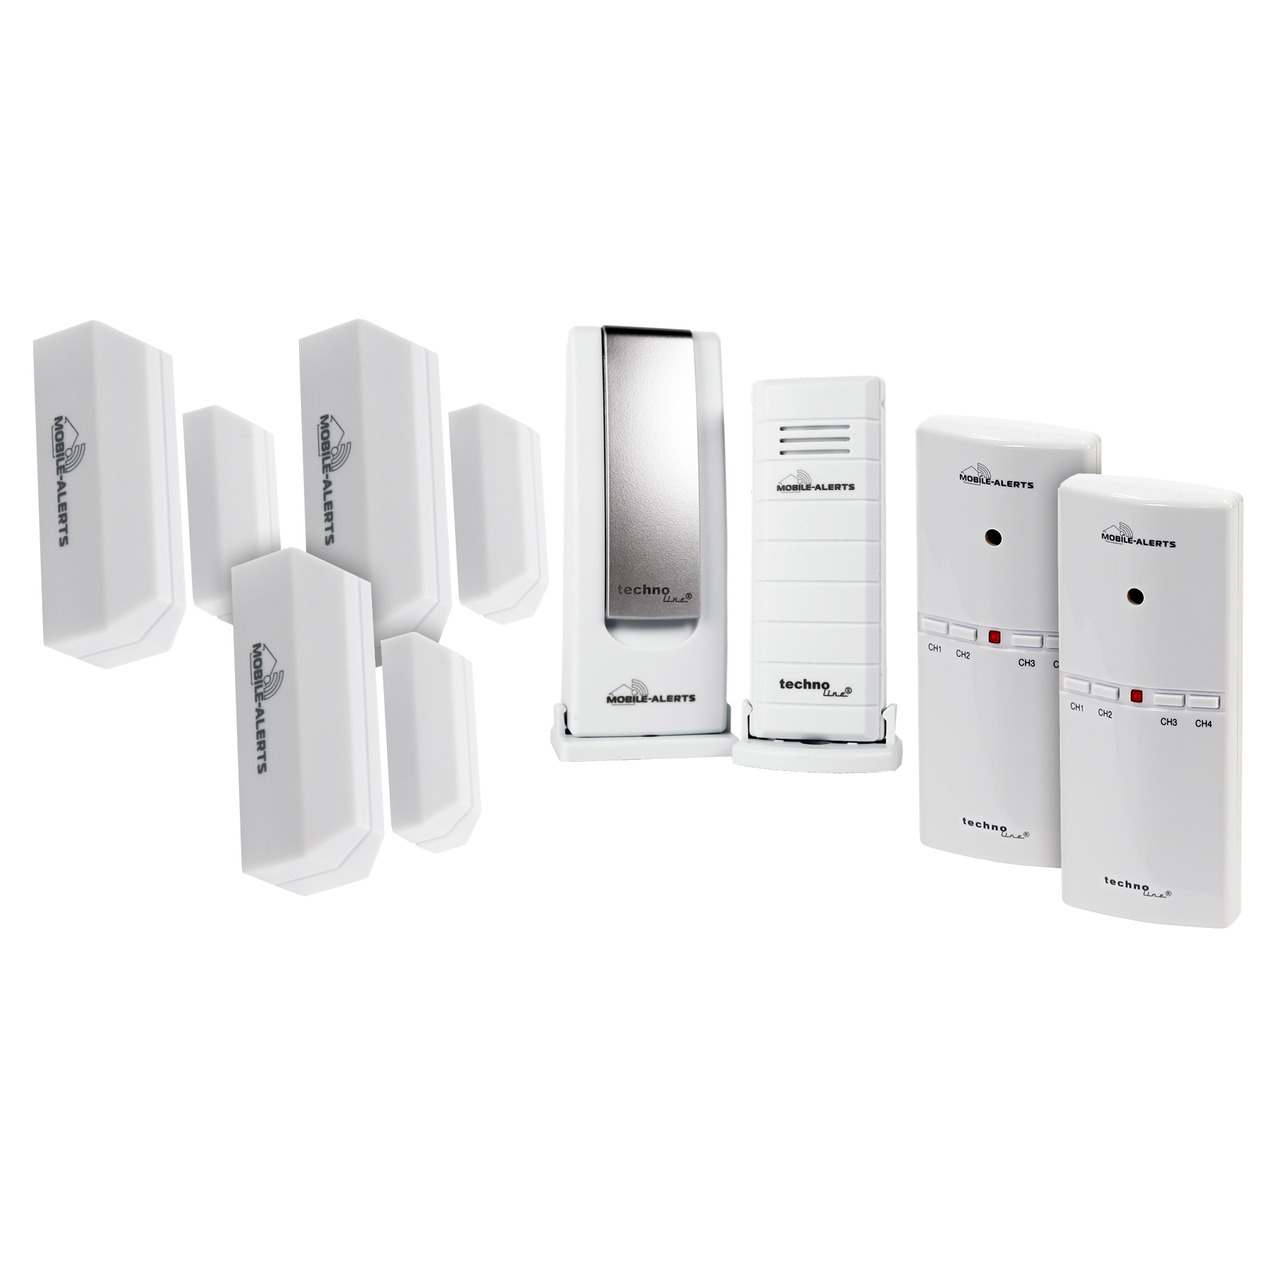 ELV Mobile Alerts Sicherheits-Set 1x Gateway- 1x Temperatursensor- 3x Fensterkontakt- 2x Alarmgeber